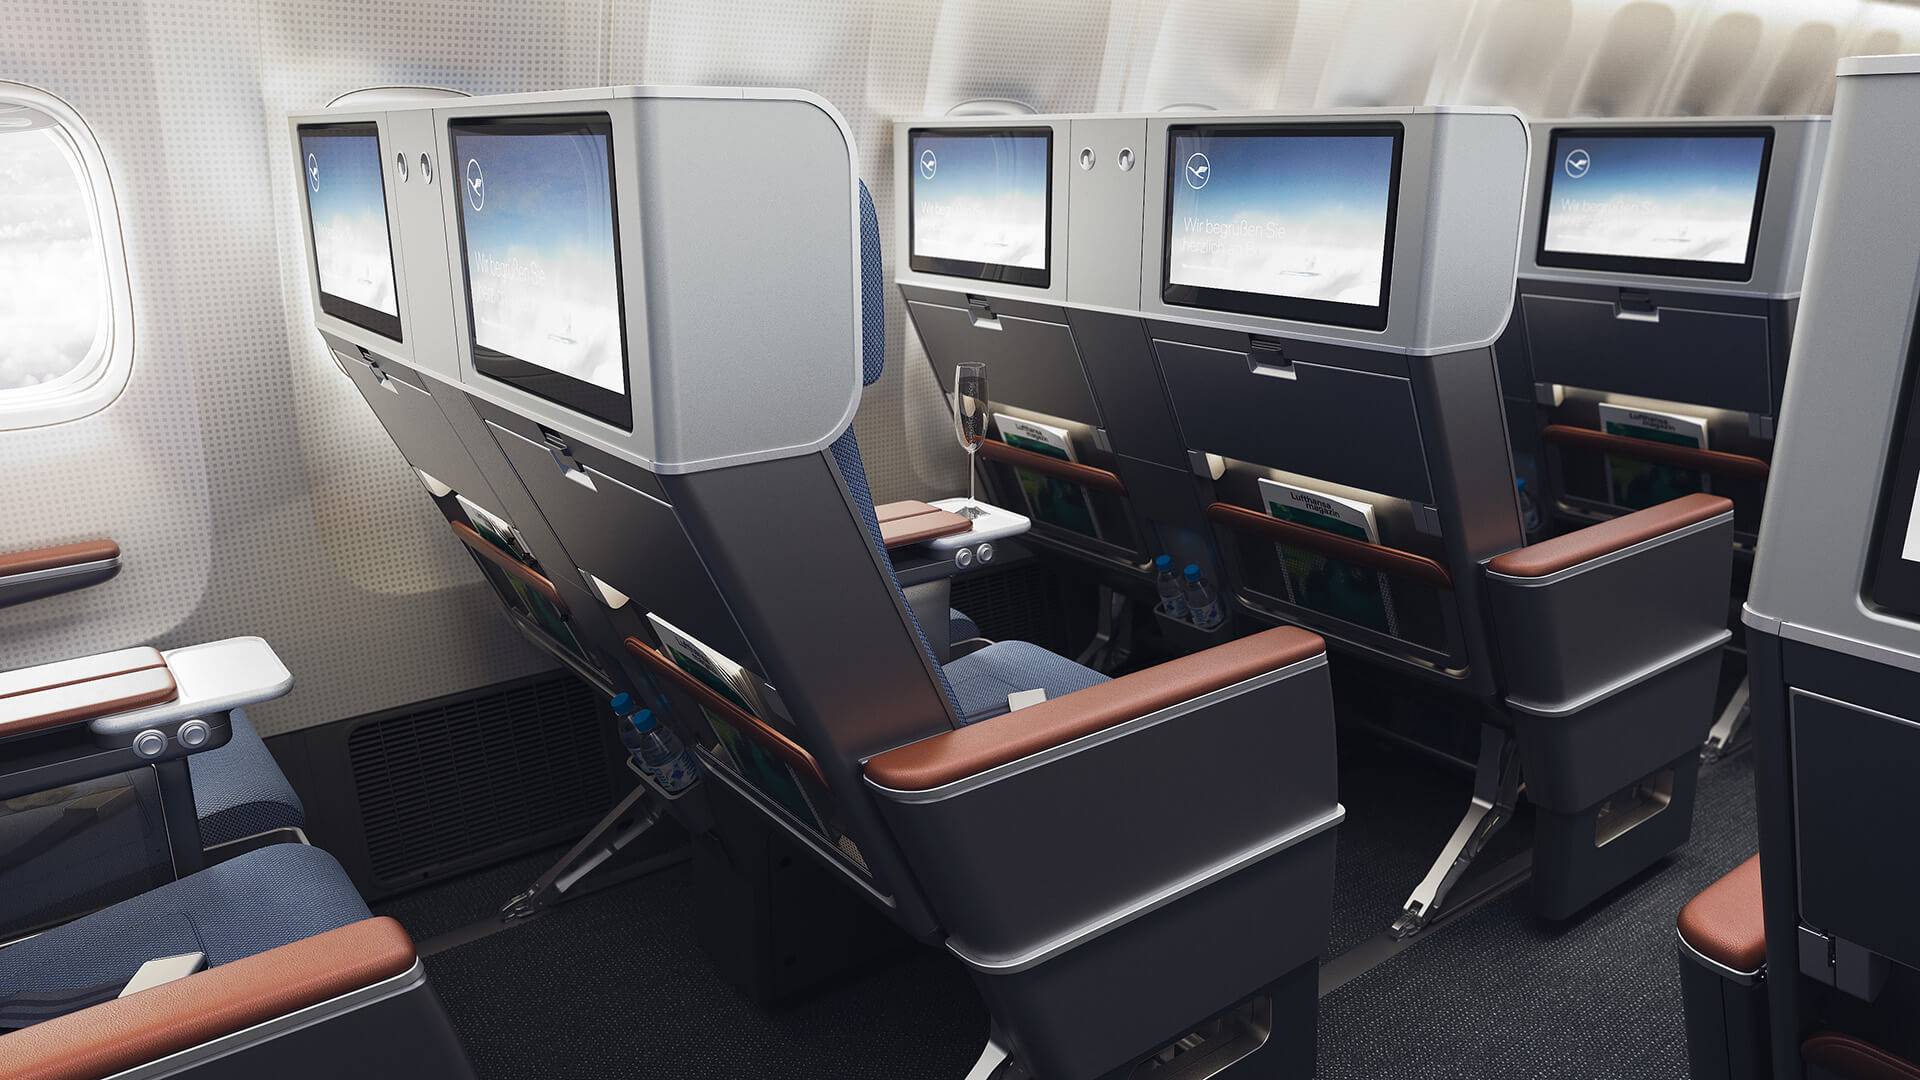 Lufthansa Premium Economy seats with screens